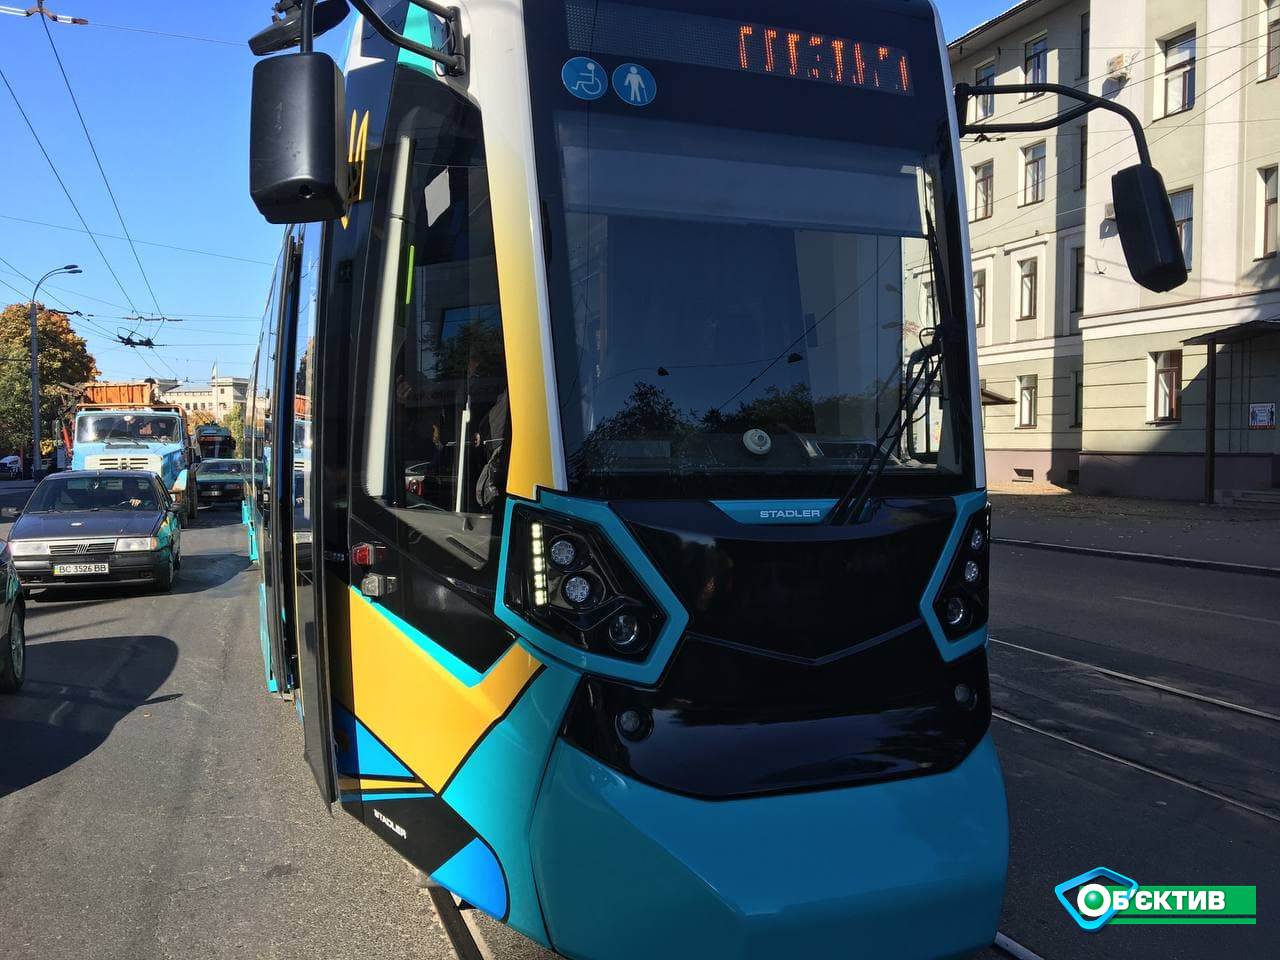 Швейцарский трамвай проехал по центру Харькова 